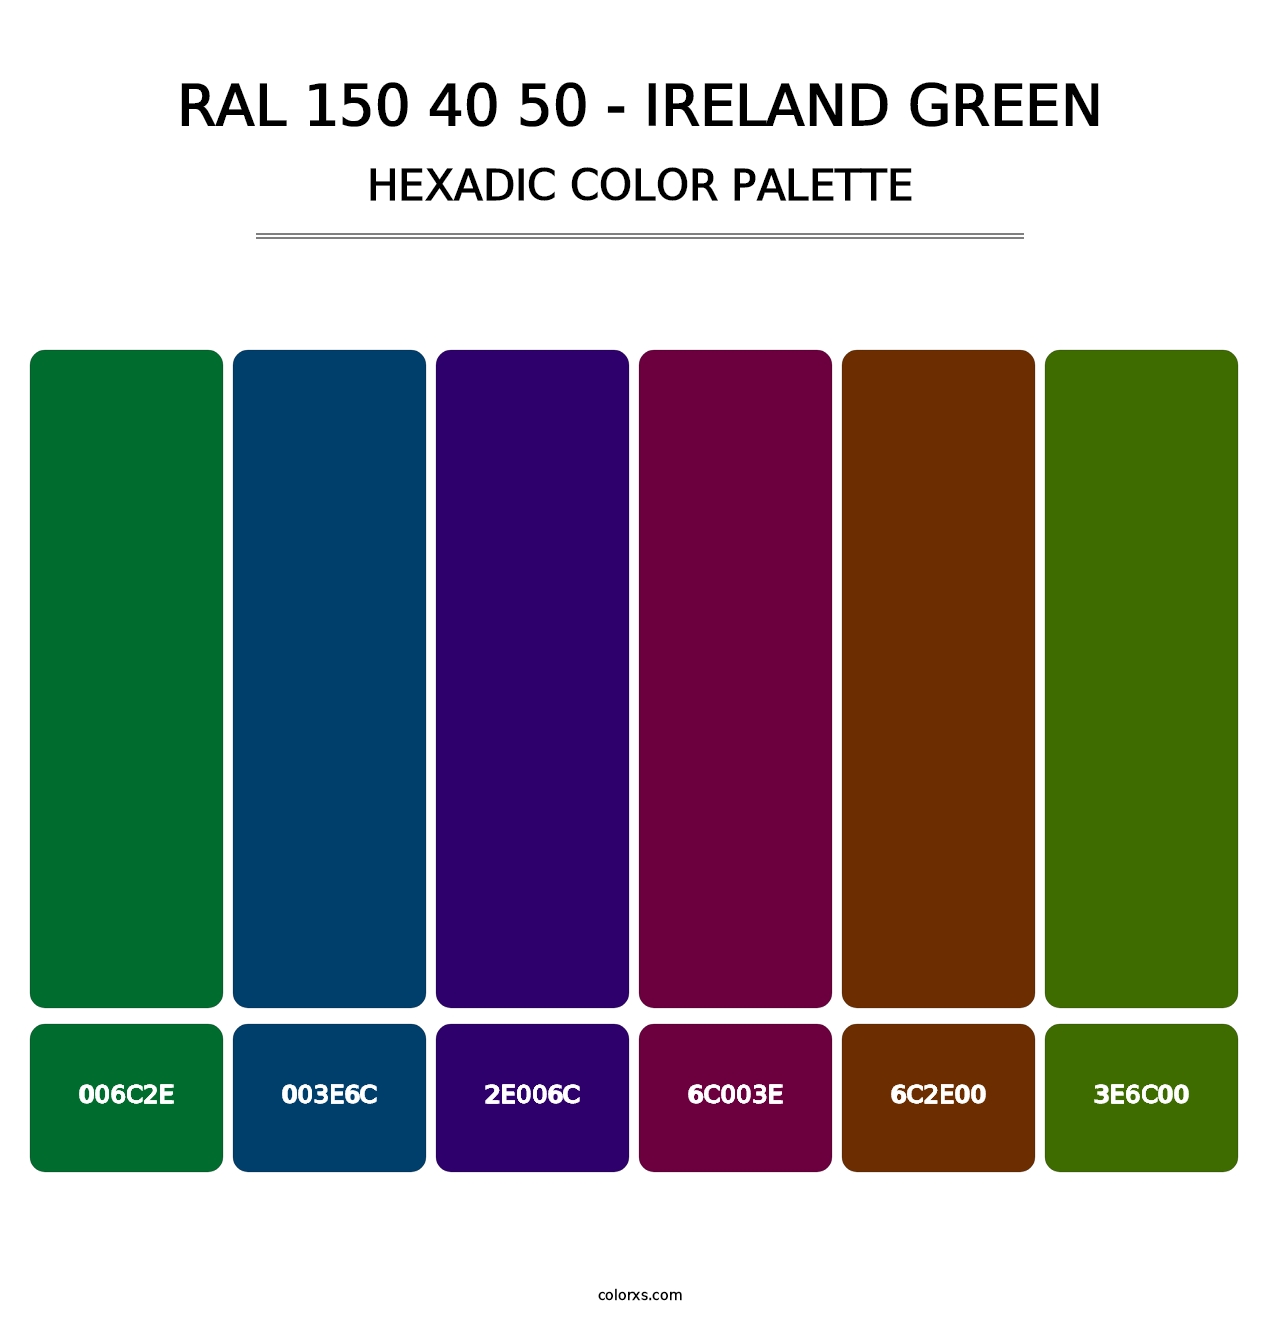 RAL 150 40 50 - Ireland Green - Hexadic Color Palette